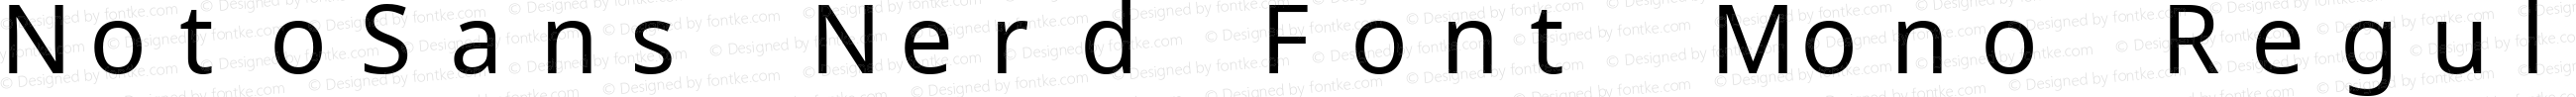 Noto Sans Regular Nerd Font Complete Mono